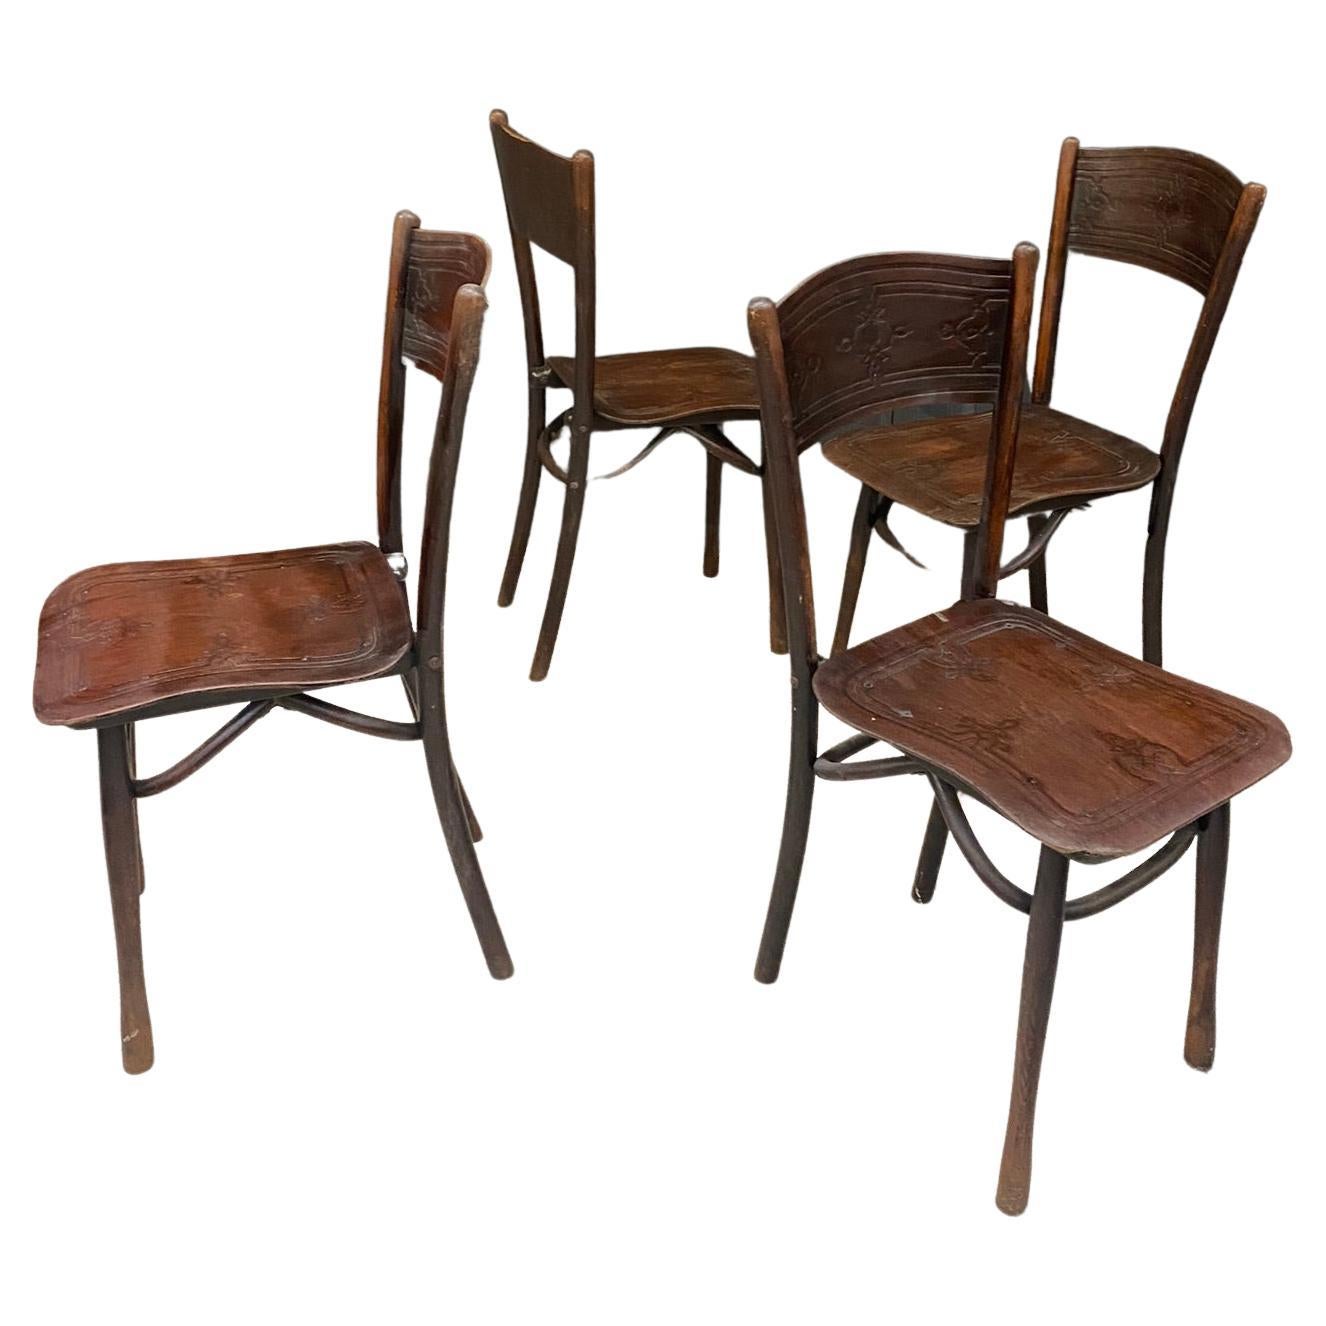 4 Antique Chairs from Jacob & Josef Kohn, circa 1900